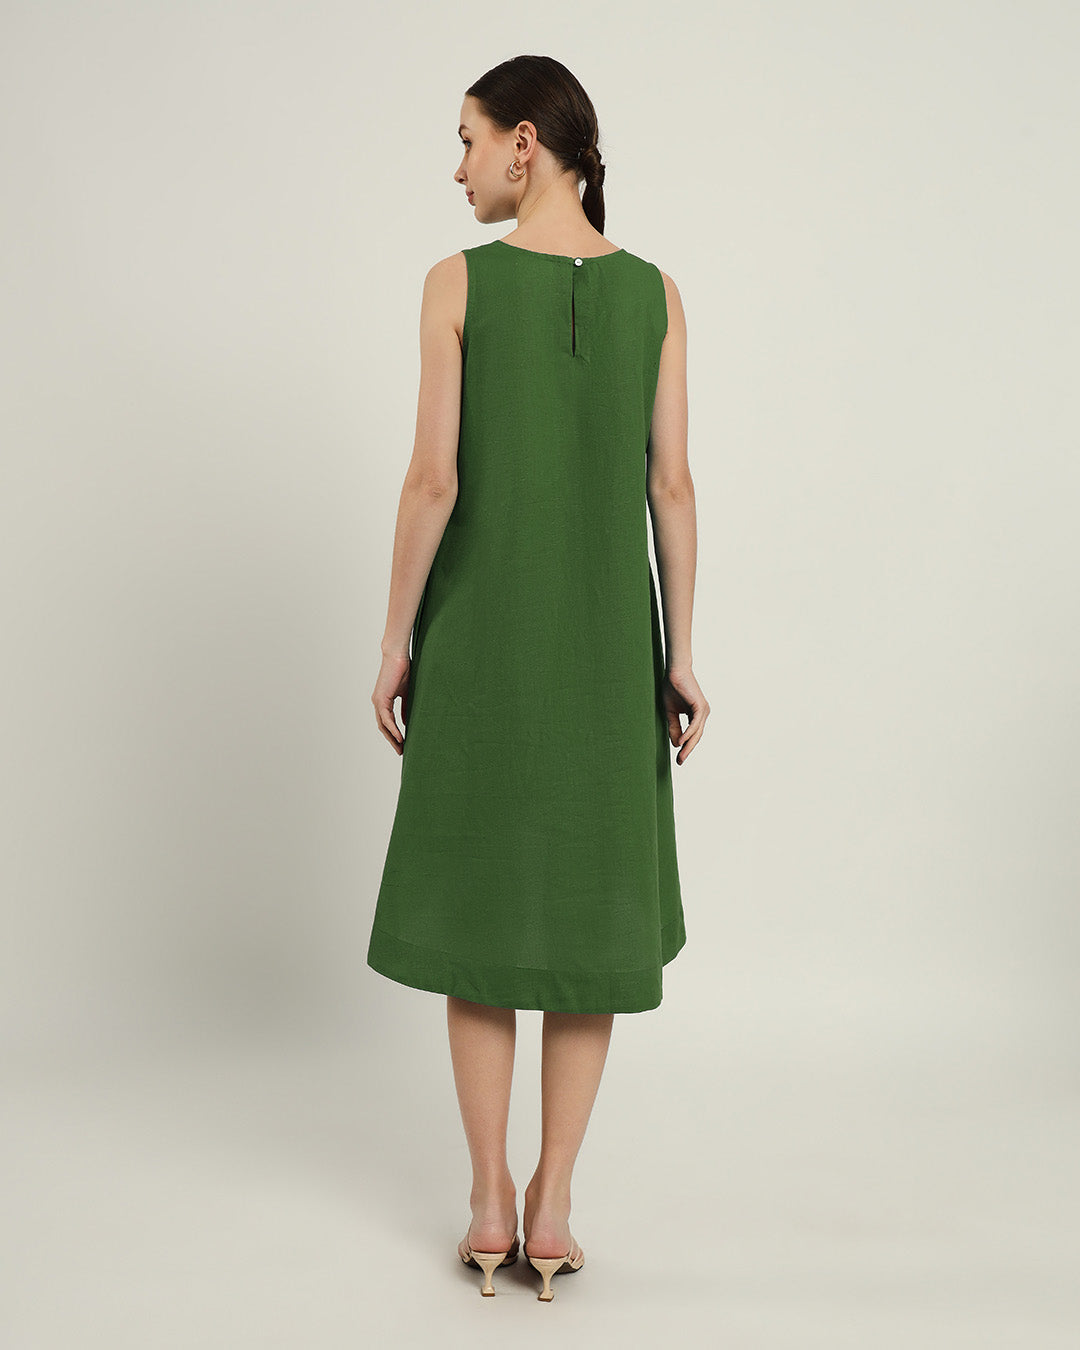 The Odesa Emerald Dress